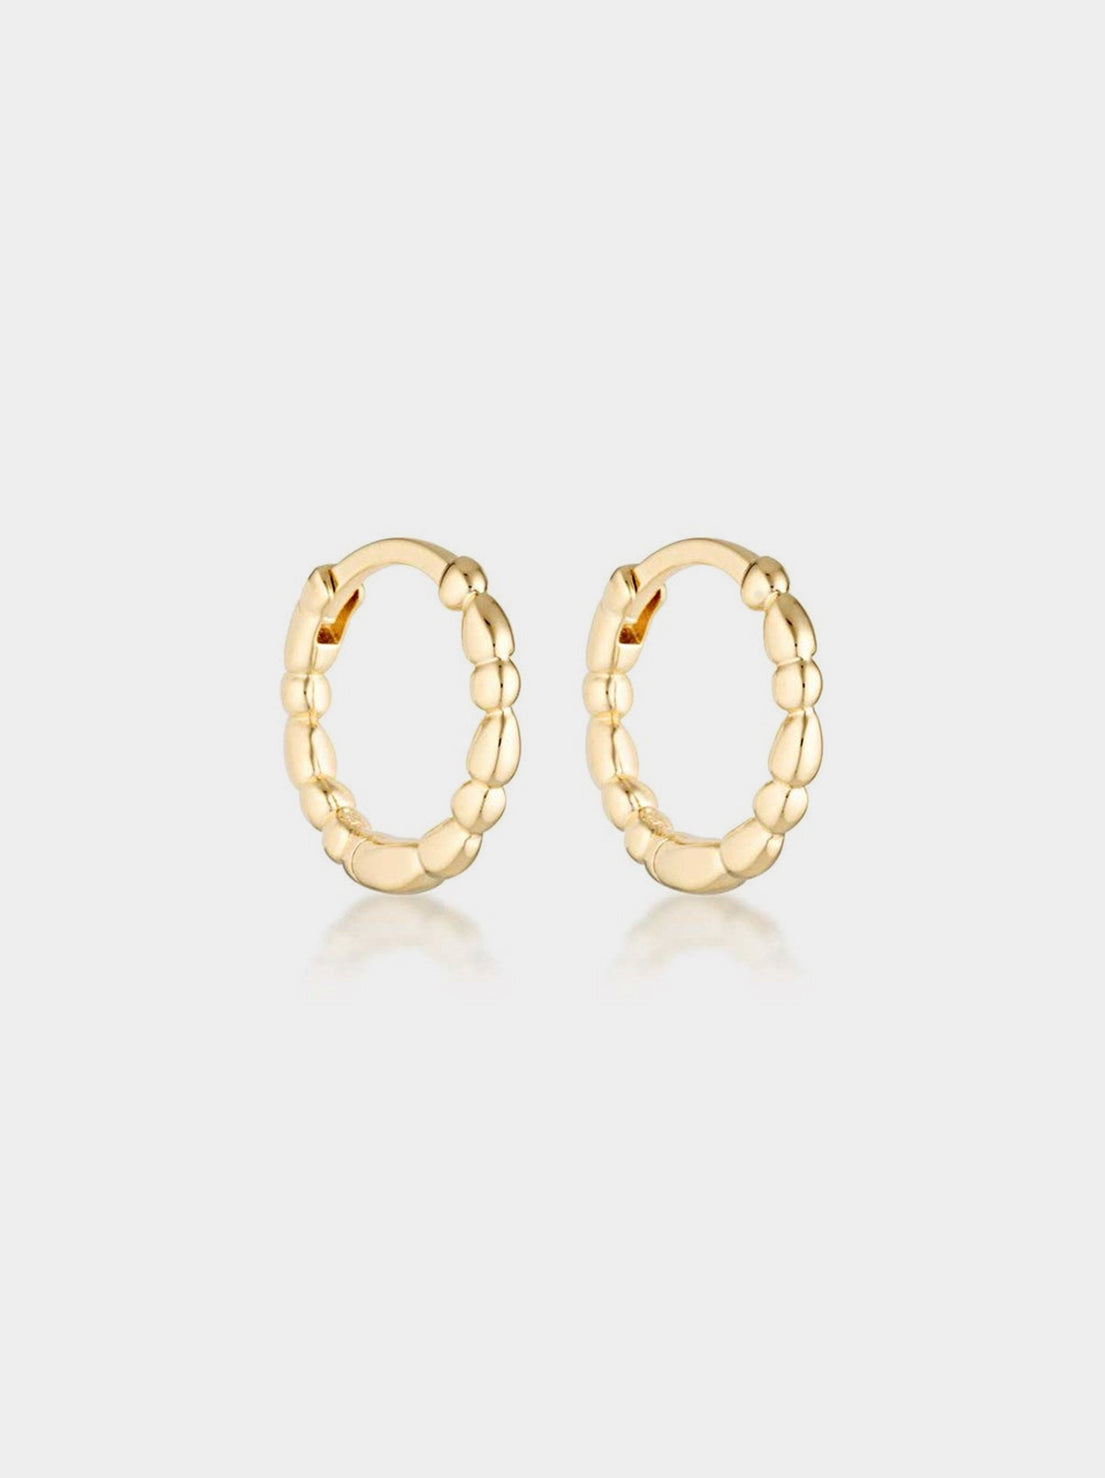 Linda Tahija - Alga Bead Huggie Earrings - Gold Plated